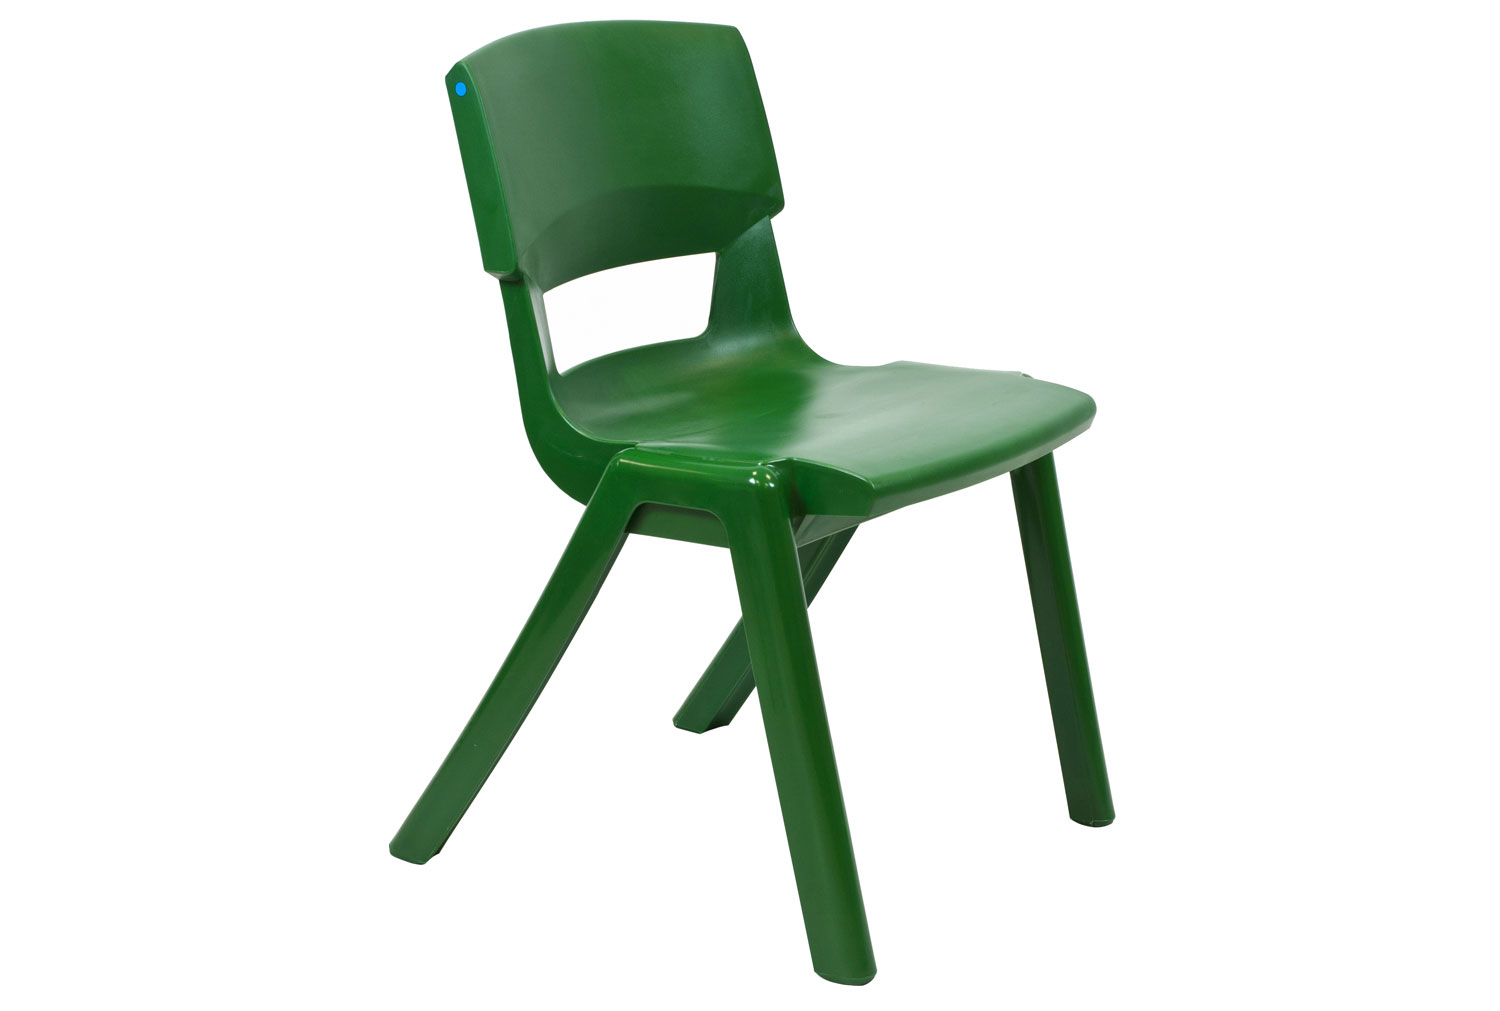 Qty 10 - Postura+ Classroom Chair, 14+ Years - 38wx37dx46h (cm), Green